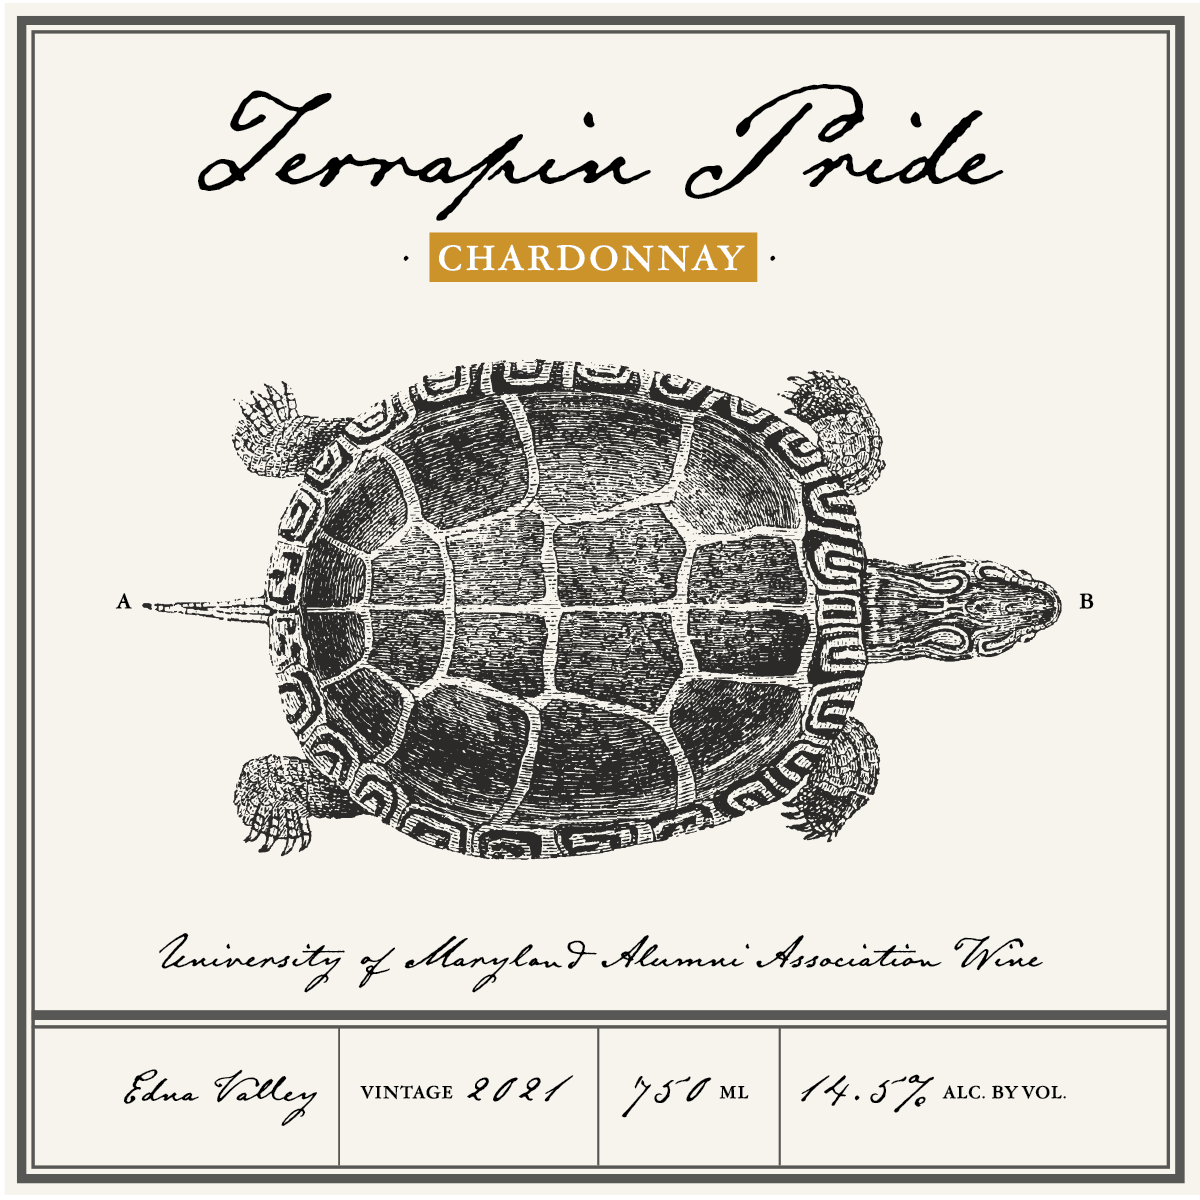 Terrapin Pride Chardonnay University of Maryland Alumni Association Wine Label